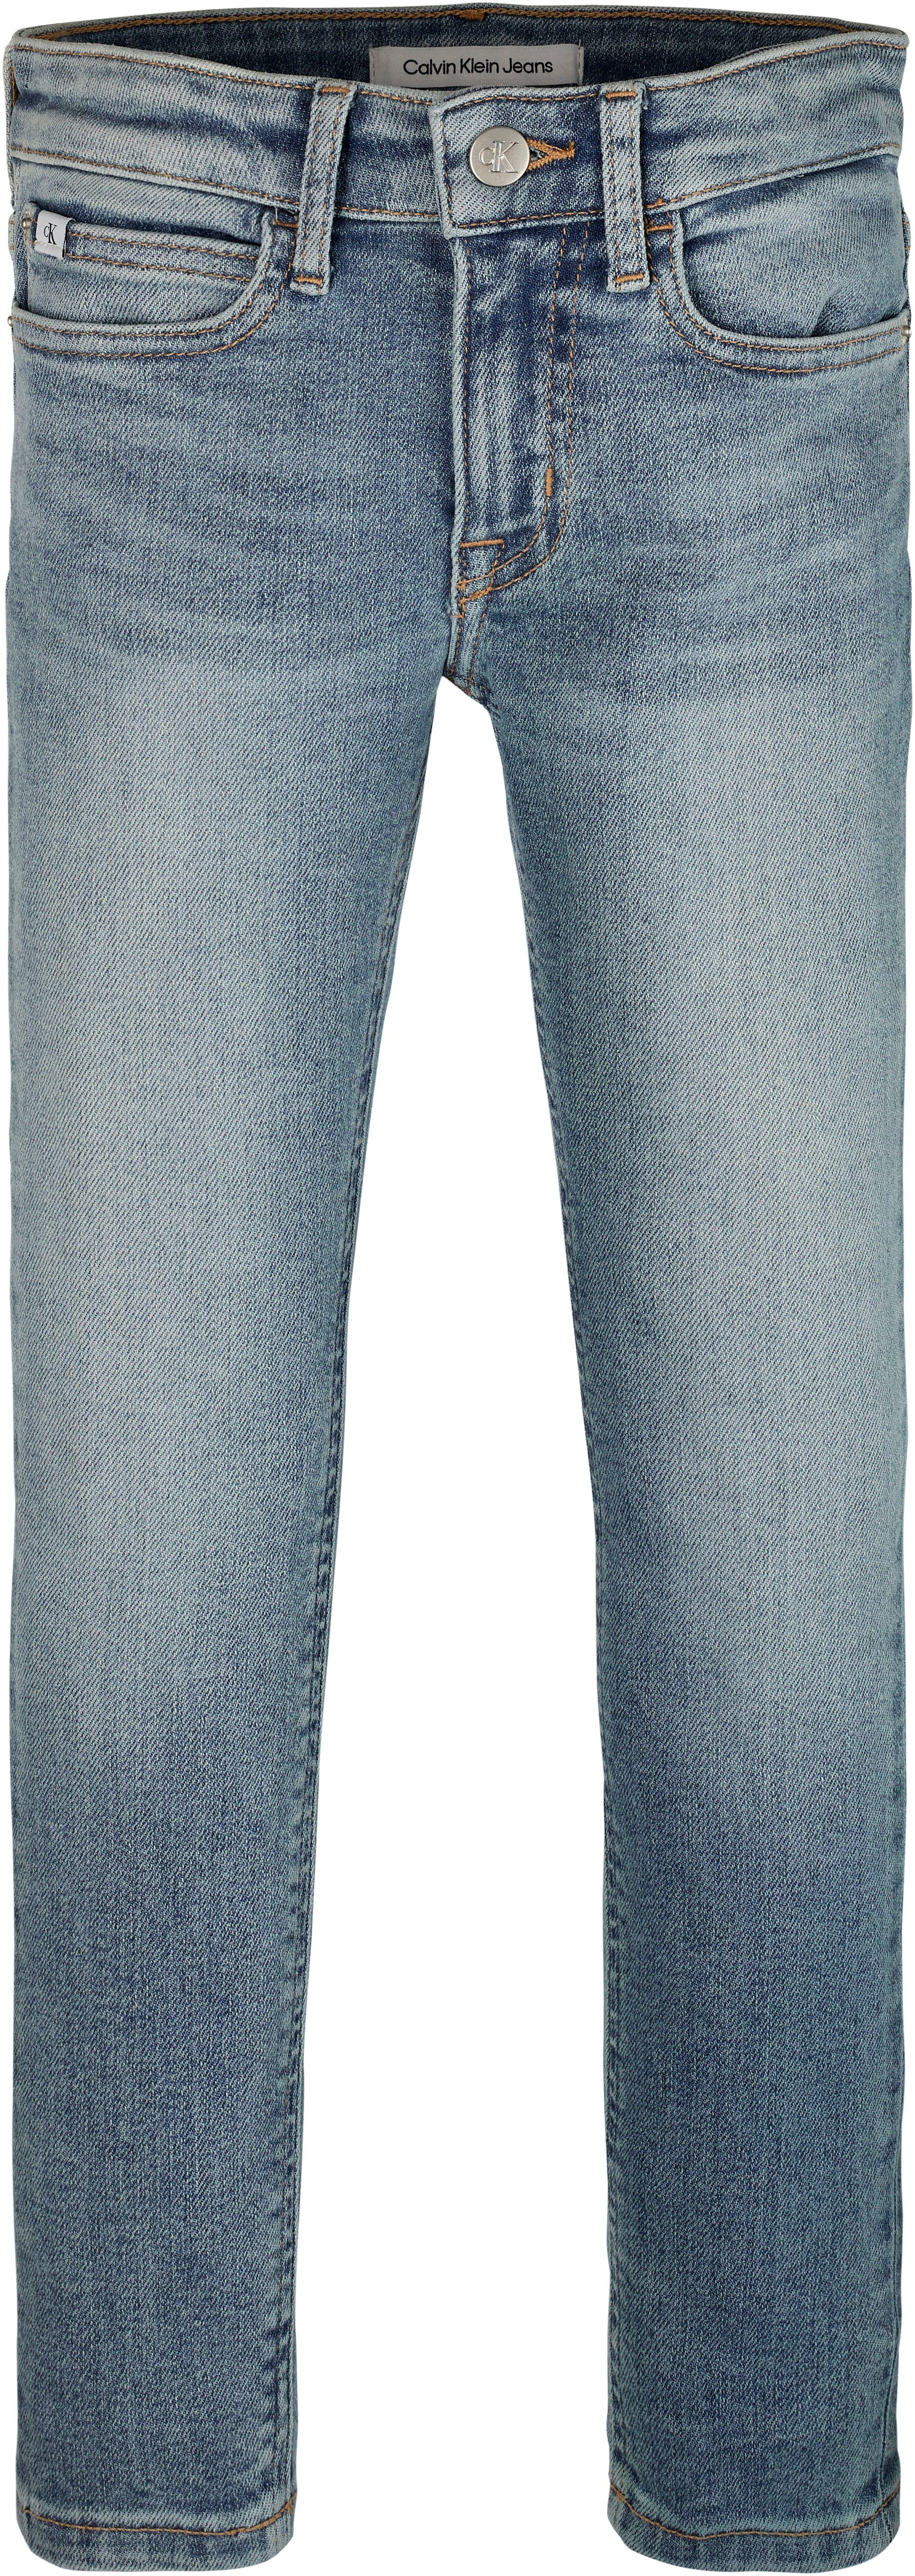 Calvin Klein Jeans Skinny-fit-Jeans RIVER für 16 Jahre Kinder bis MR SKINNY STR BLUE FRESH